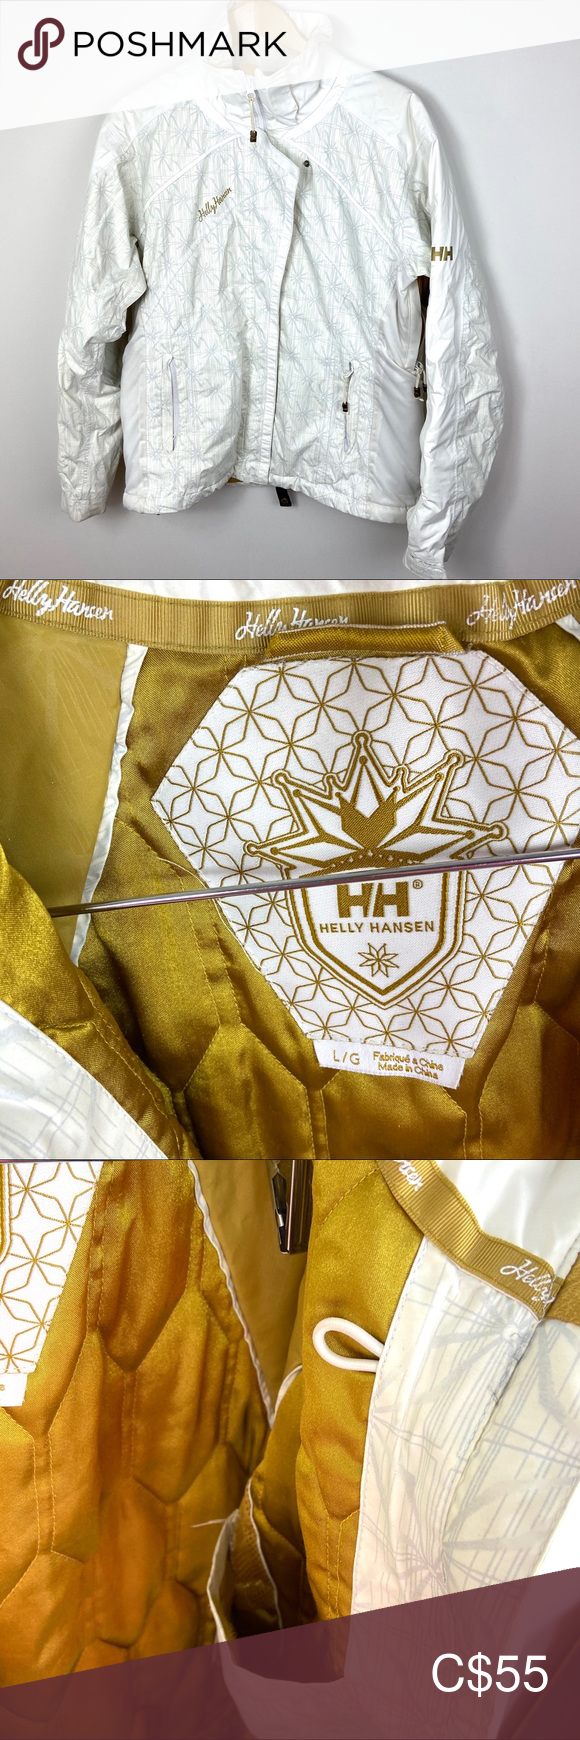 Helly Hansen Women’s Ski Jacket White Size Large